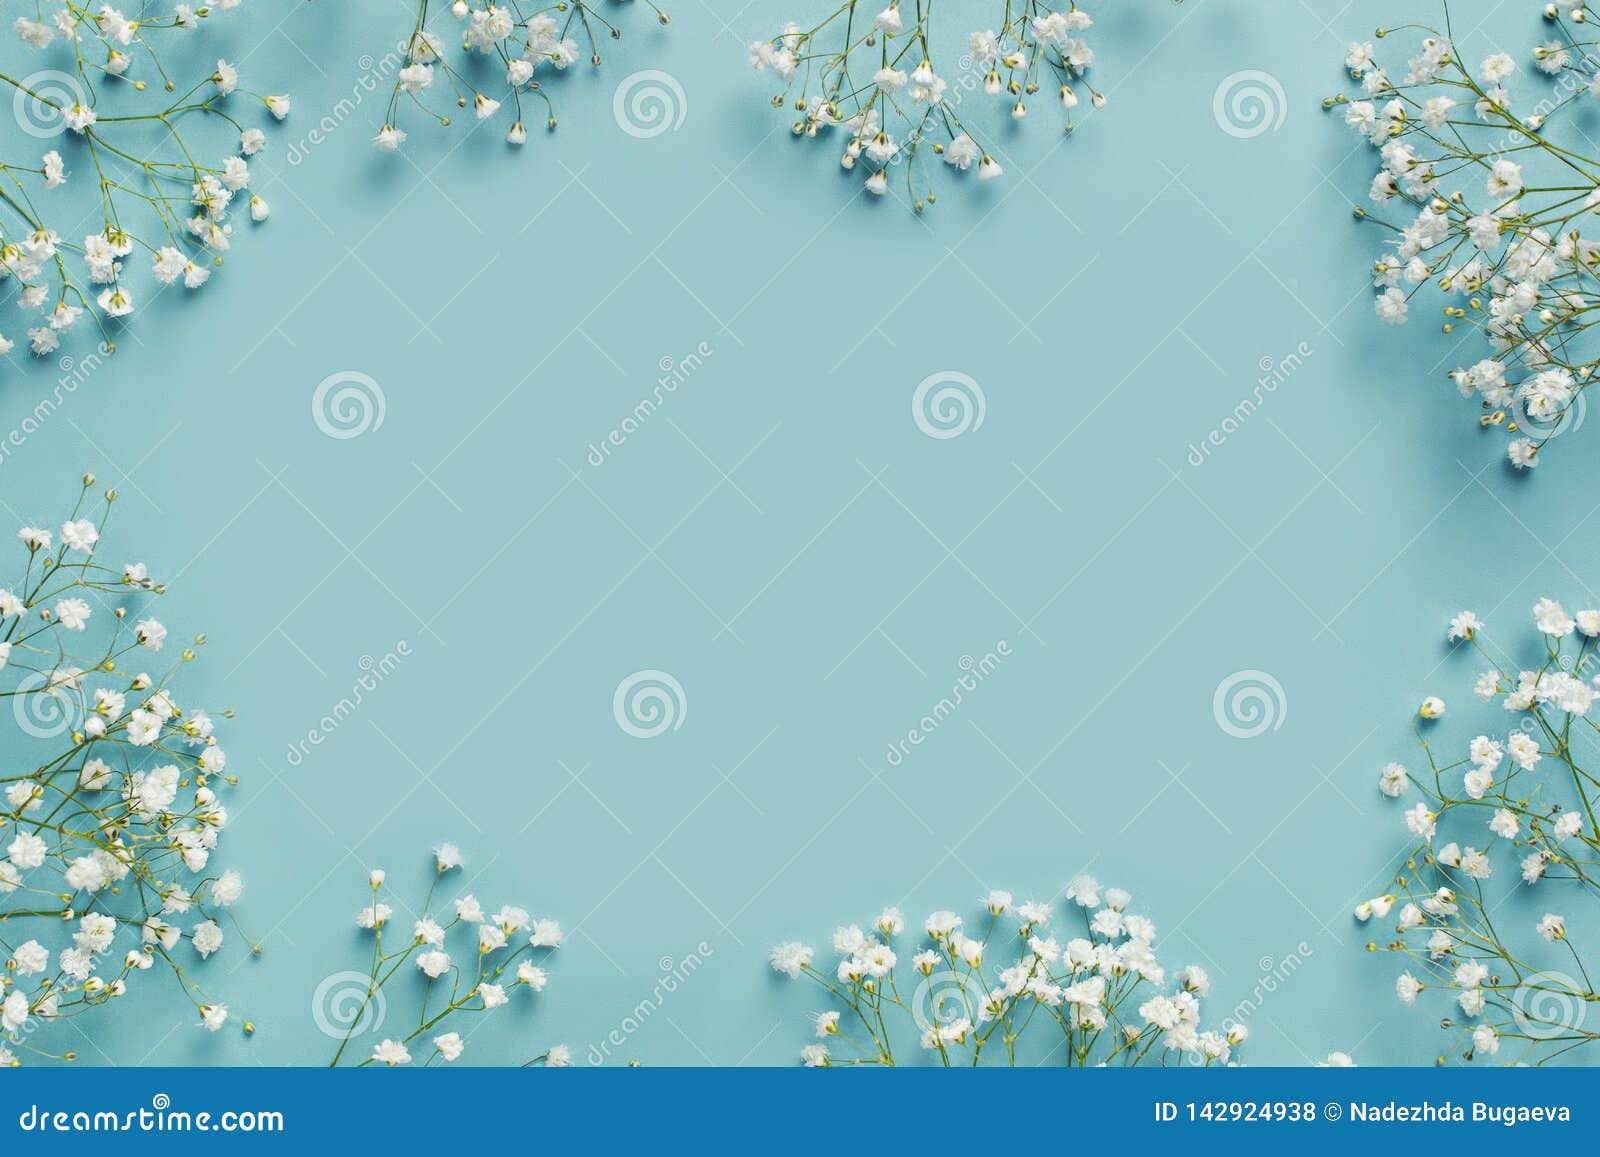 blue fashion, flowers flat lay background